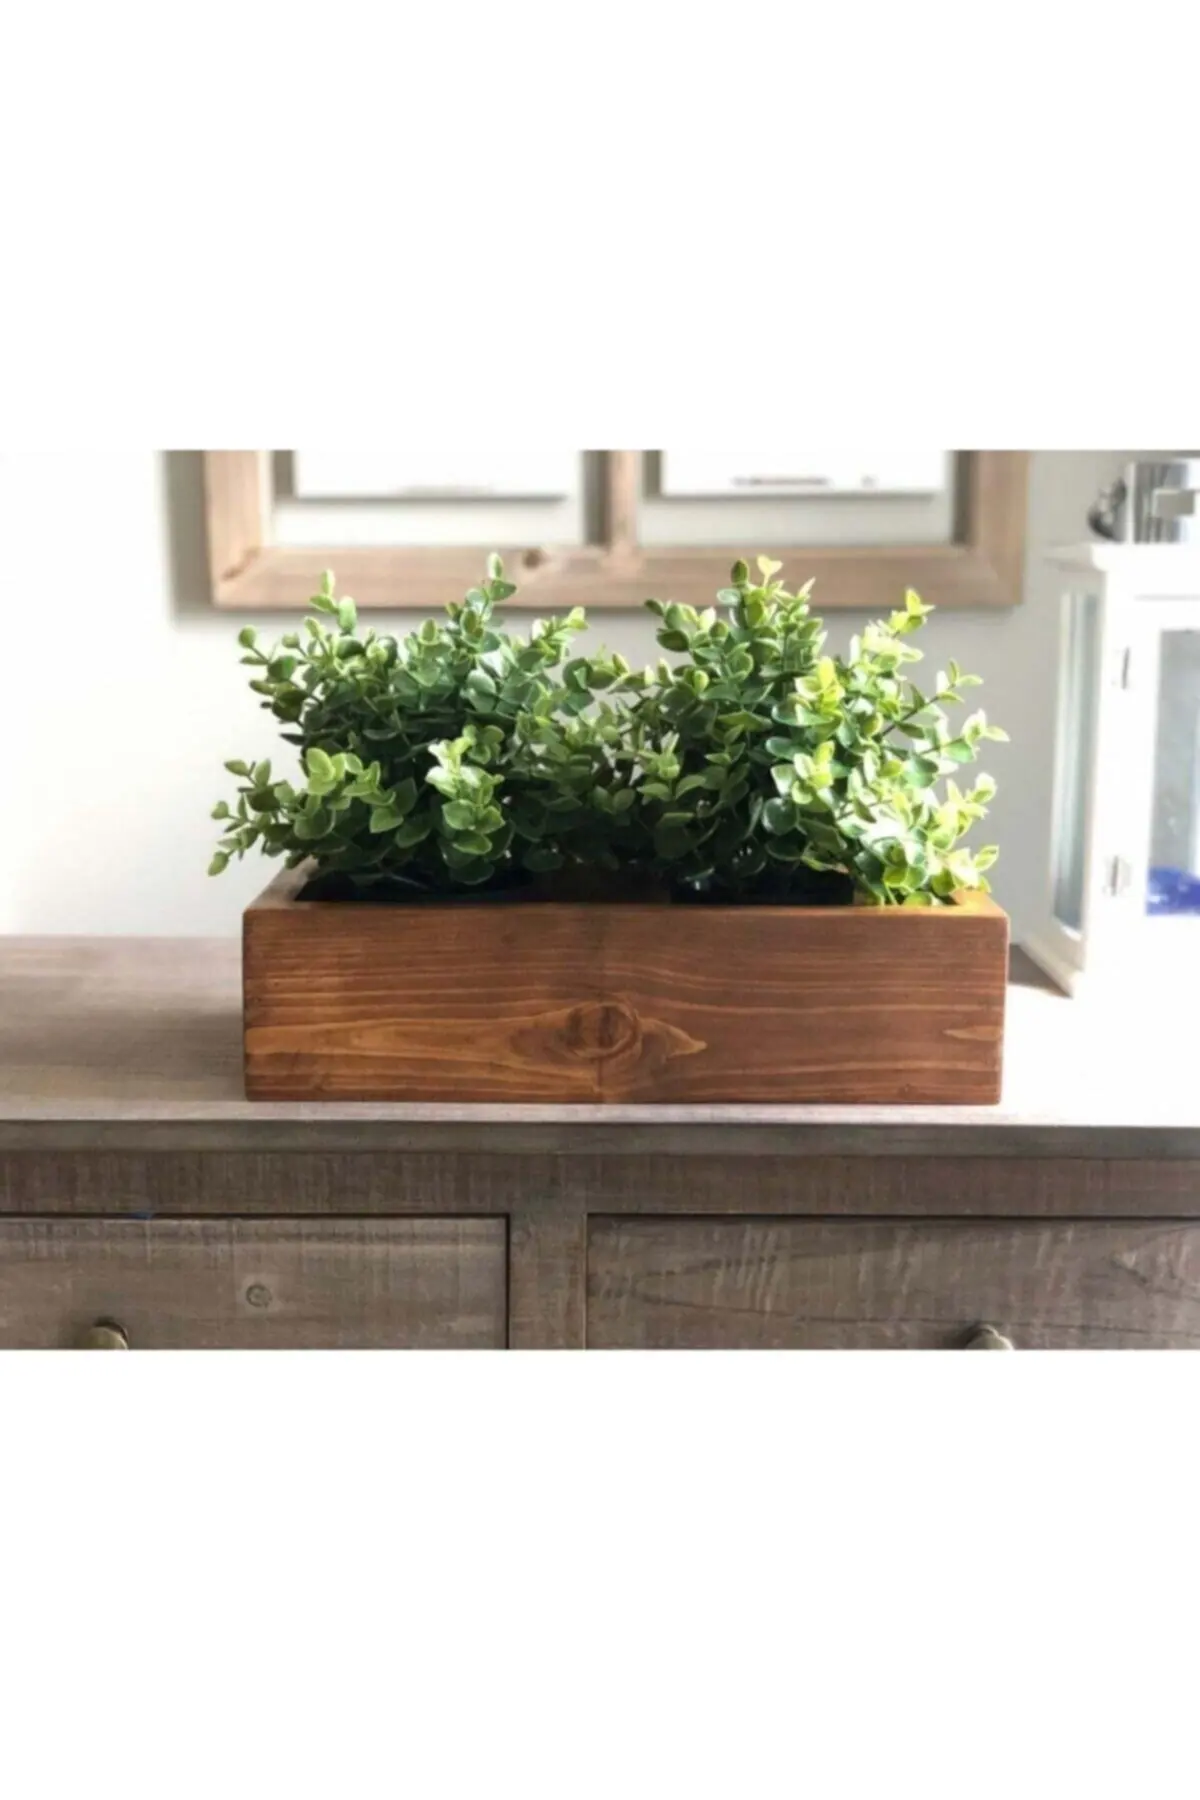 Wooden Pot Entice In Cactus or Organizer Multi-Purpose Box entice in